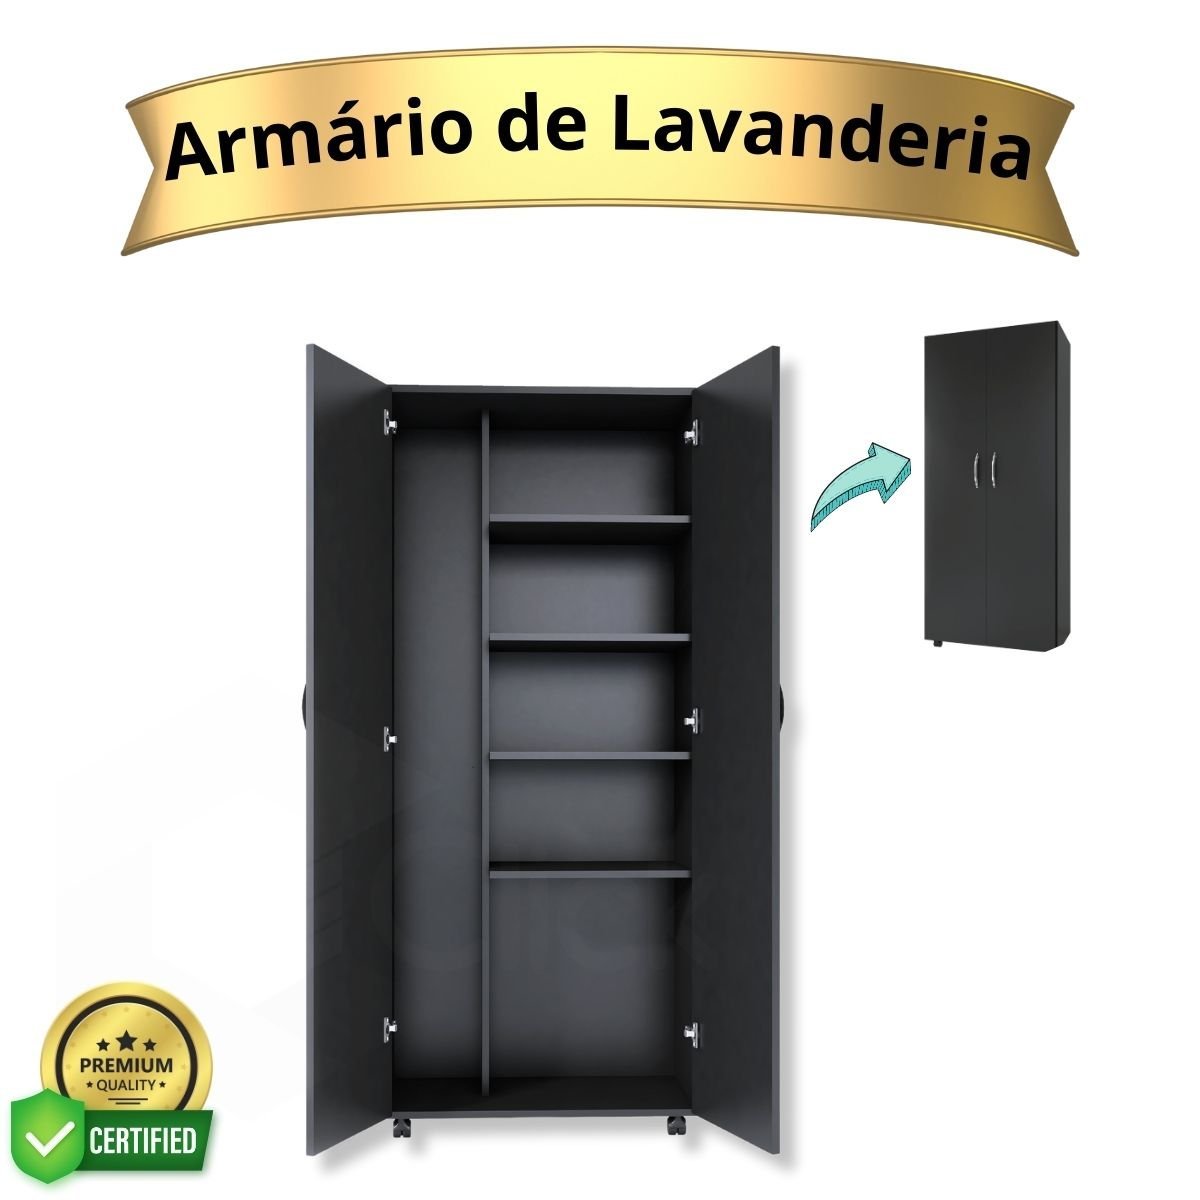 Armário Lavanderia Multiuso 2 Portas ClickForte Preto - 7